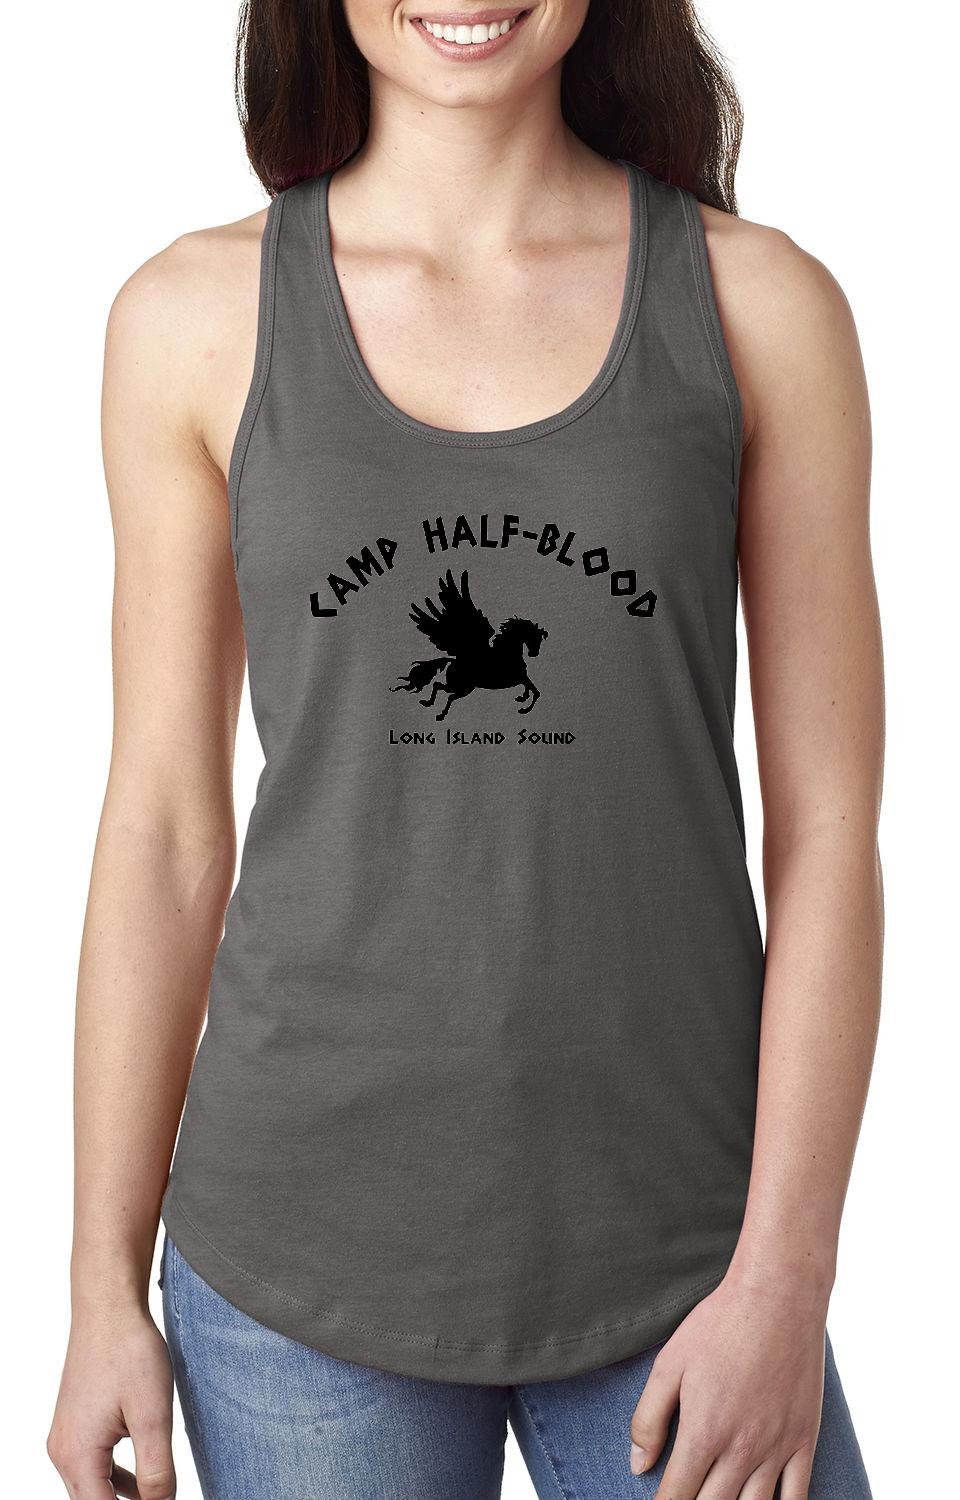 Camiseta Camp Half Blood Percy Jackson 100% Poliéster #2165 - R